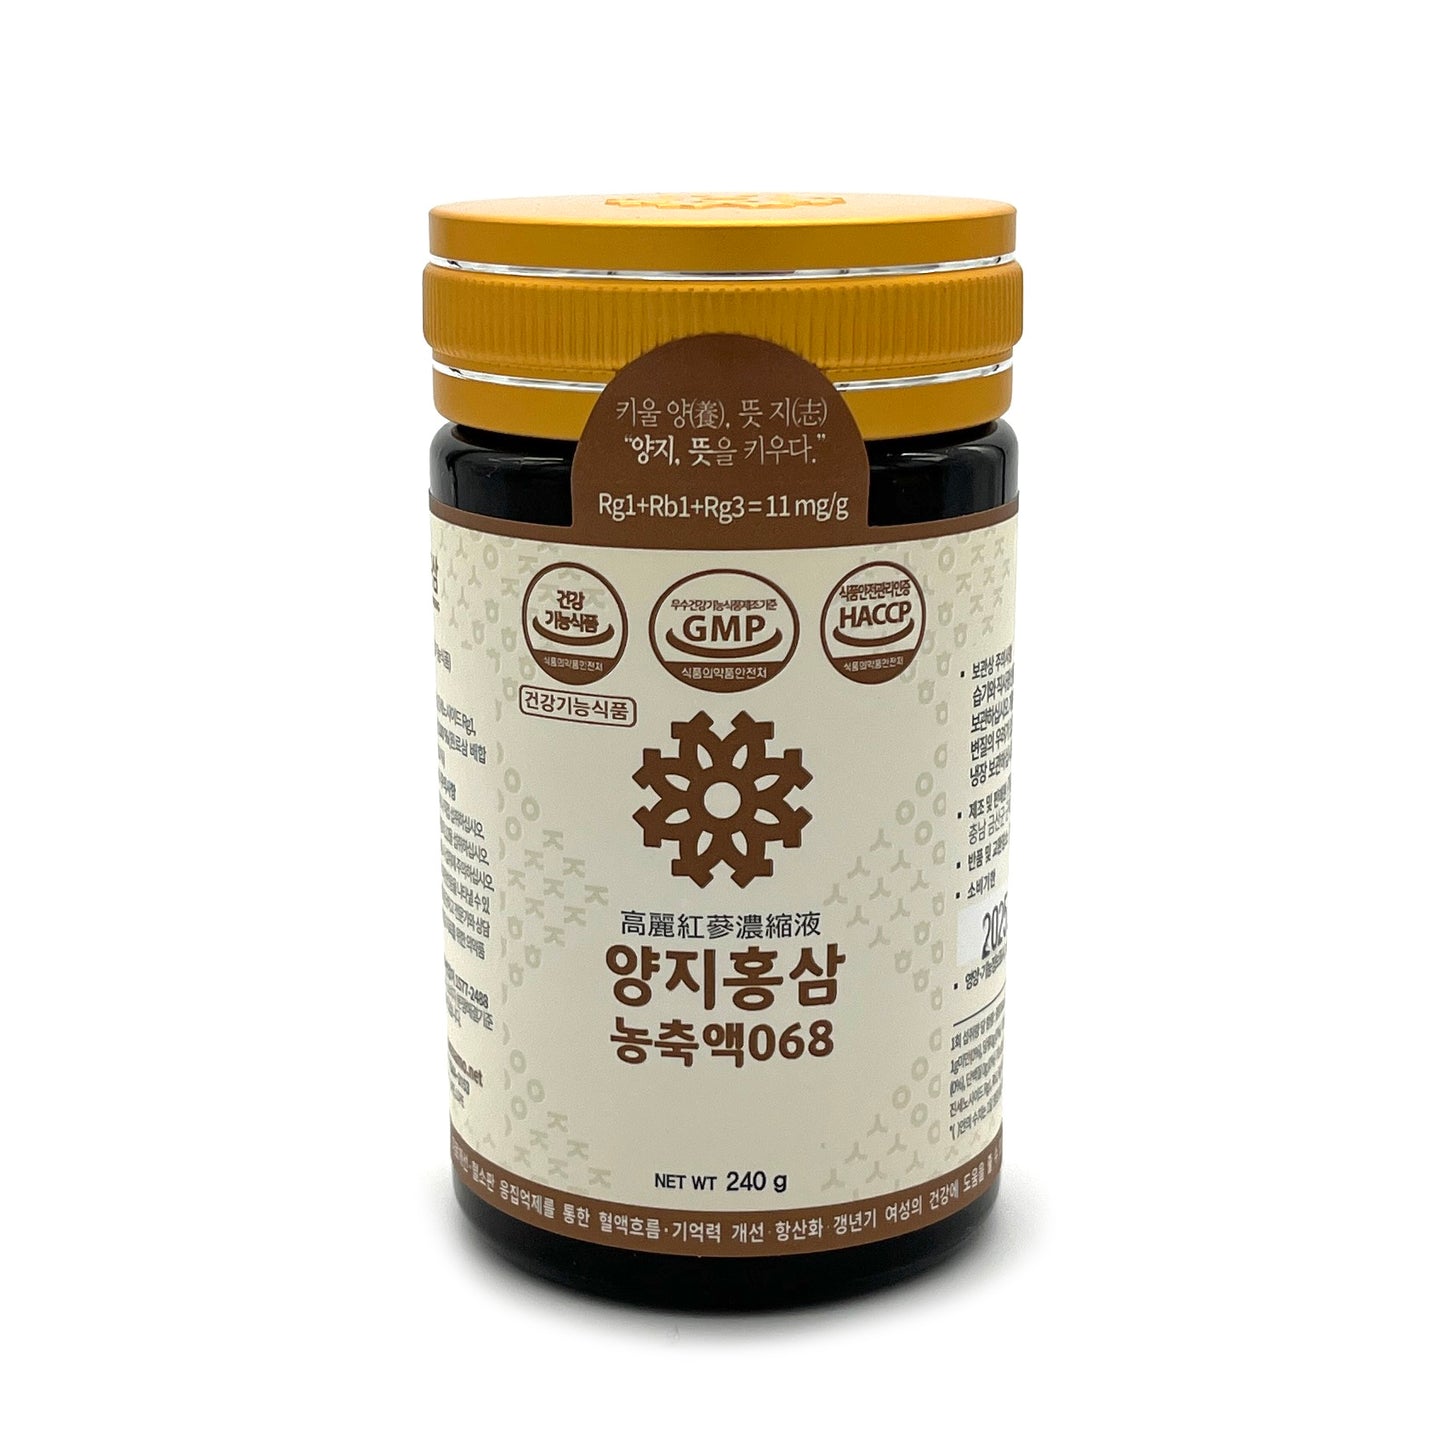 [Yangji] Korean Red Ginseng Extract 068 (240g)